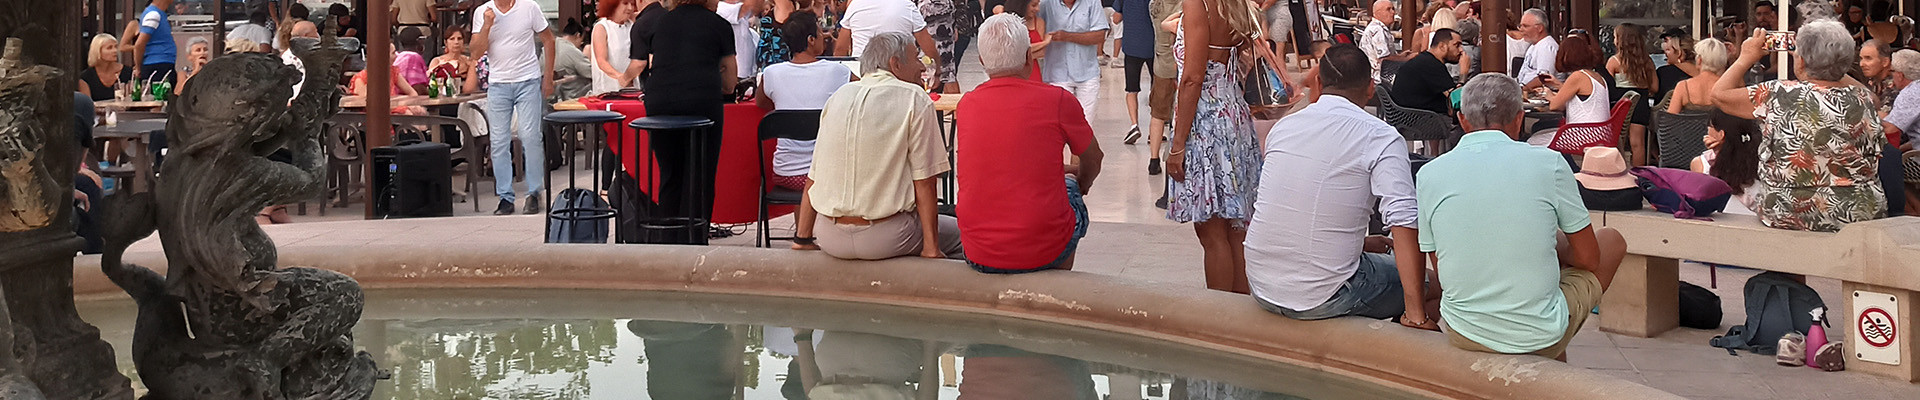 Entertainment in Martigues